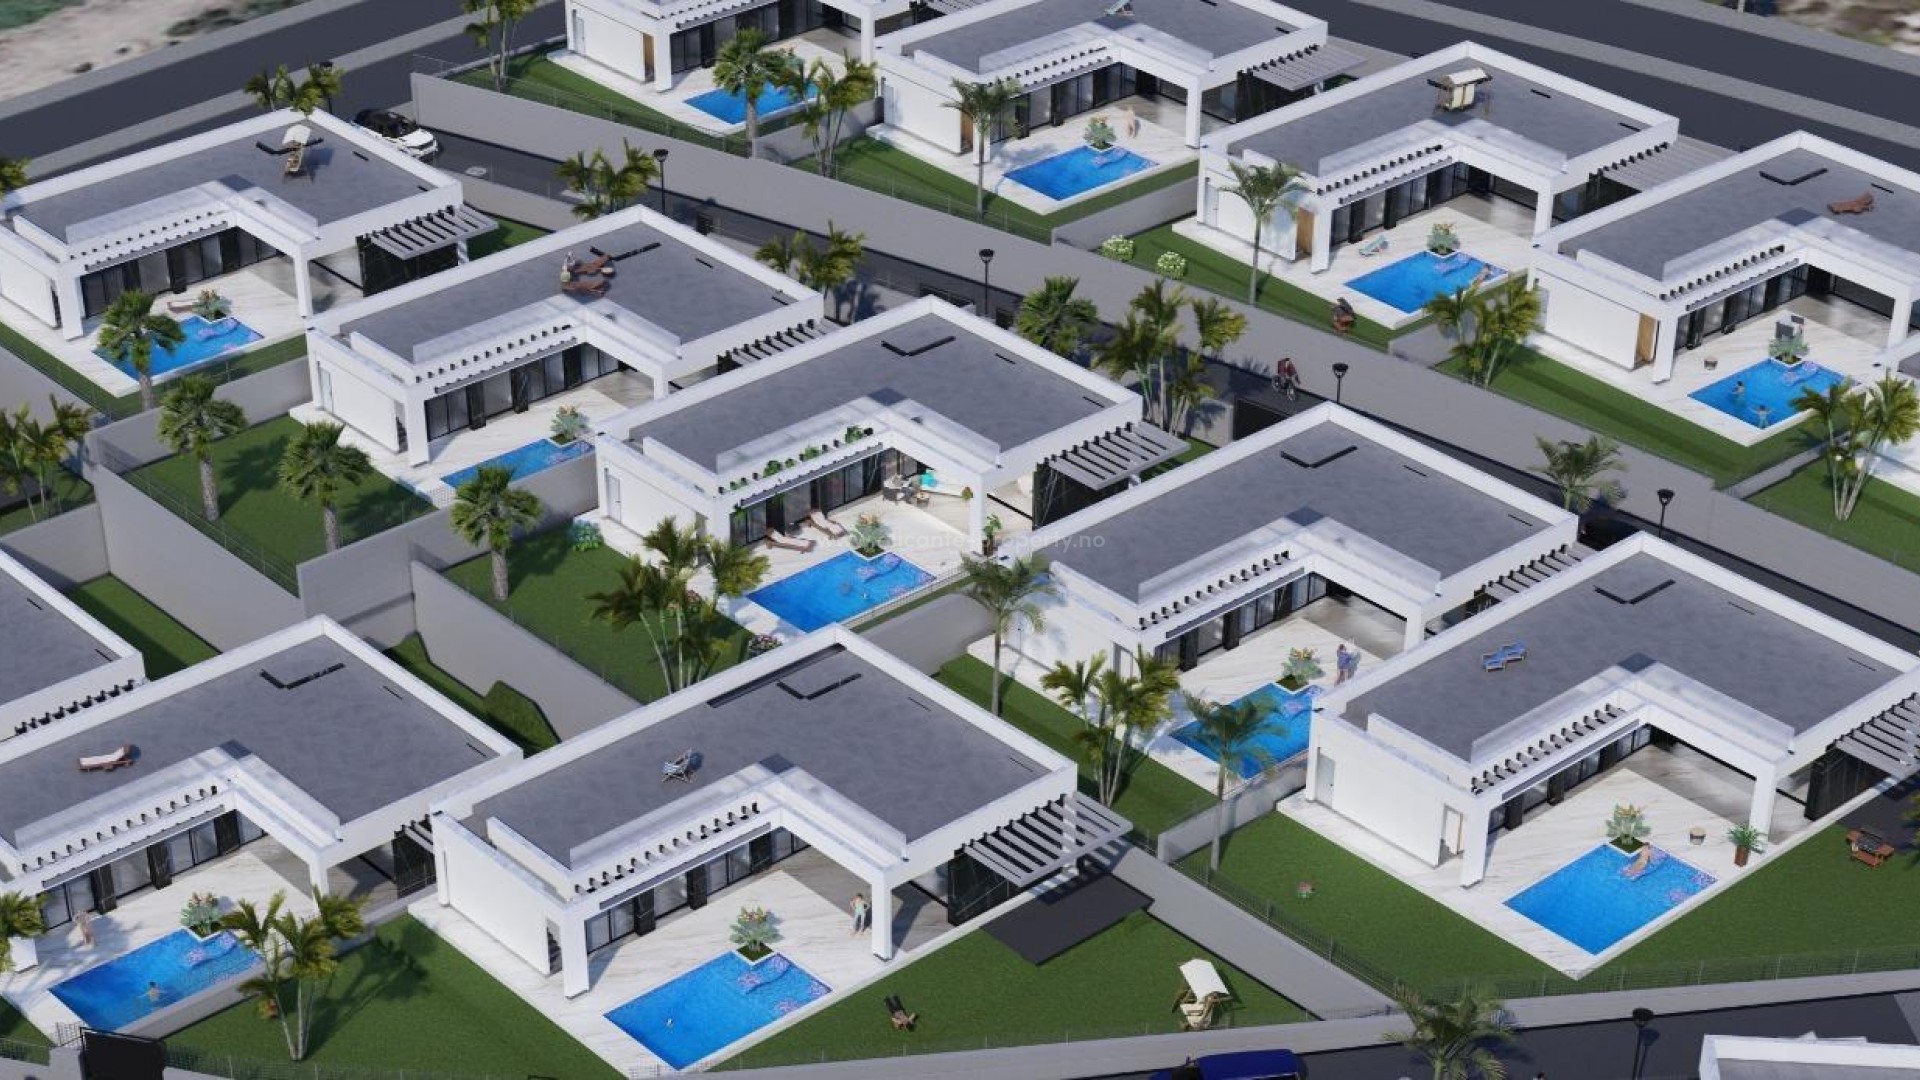 New houses/villas in La Finca Golf in Algorfa, 3 bedrooms, 2 bathrooms, garden with pool, terrace and solarium. Private parking space